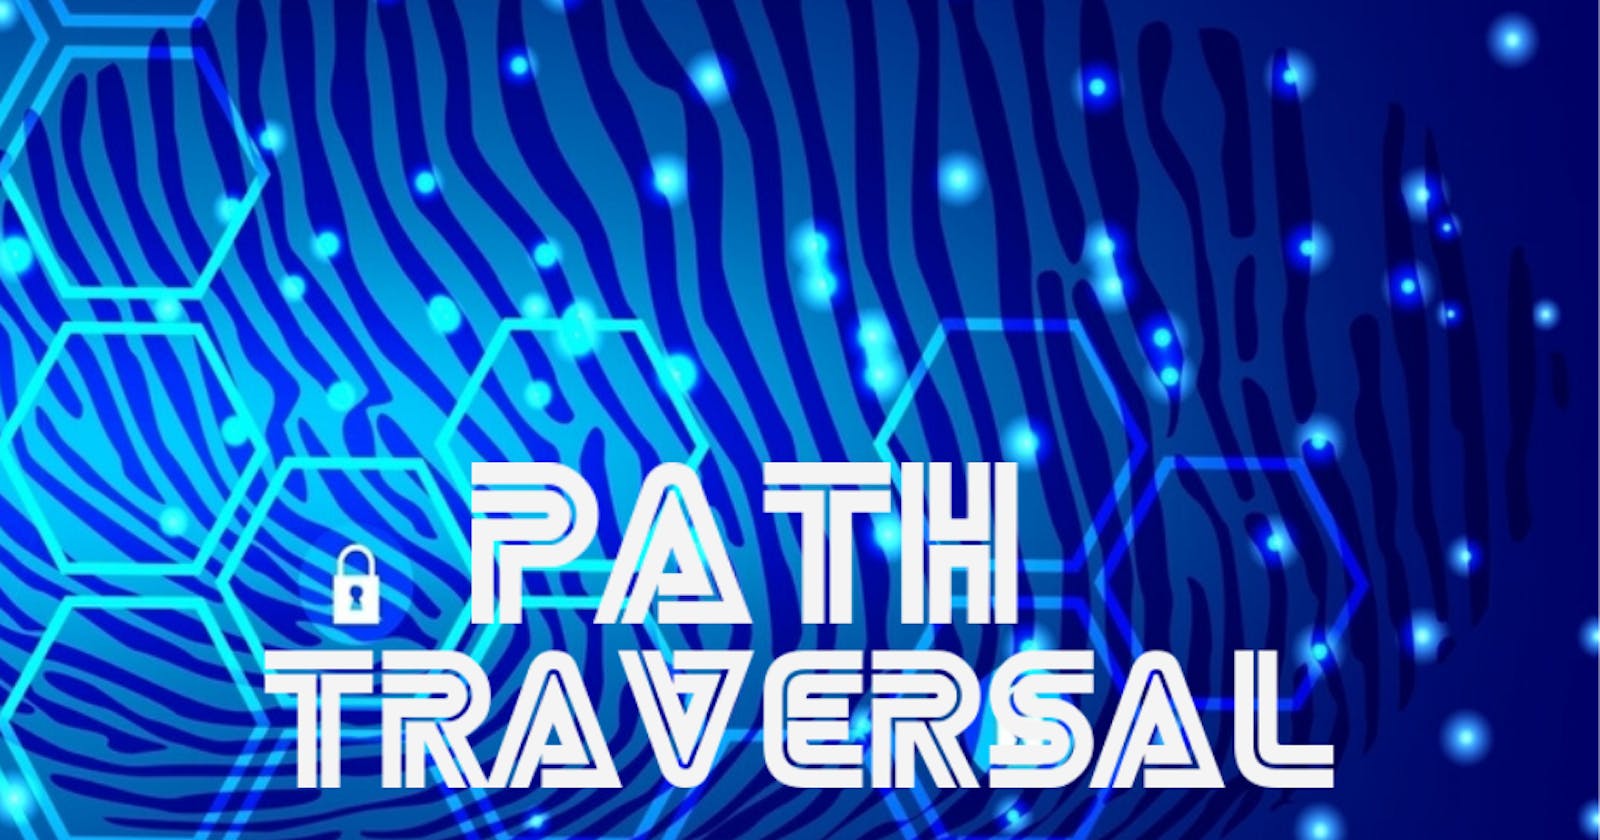 File path traversal, validation of start of path Walkthrough